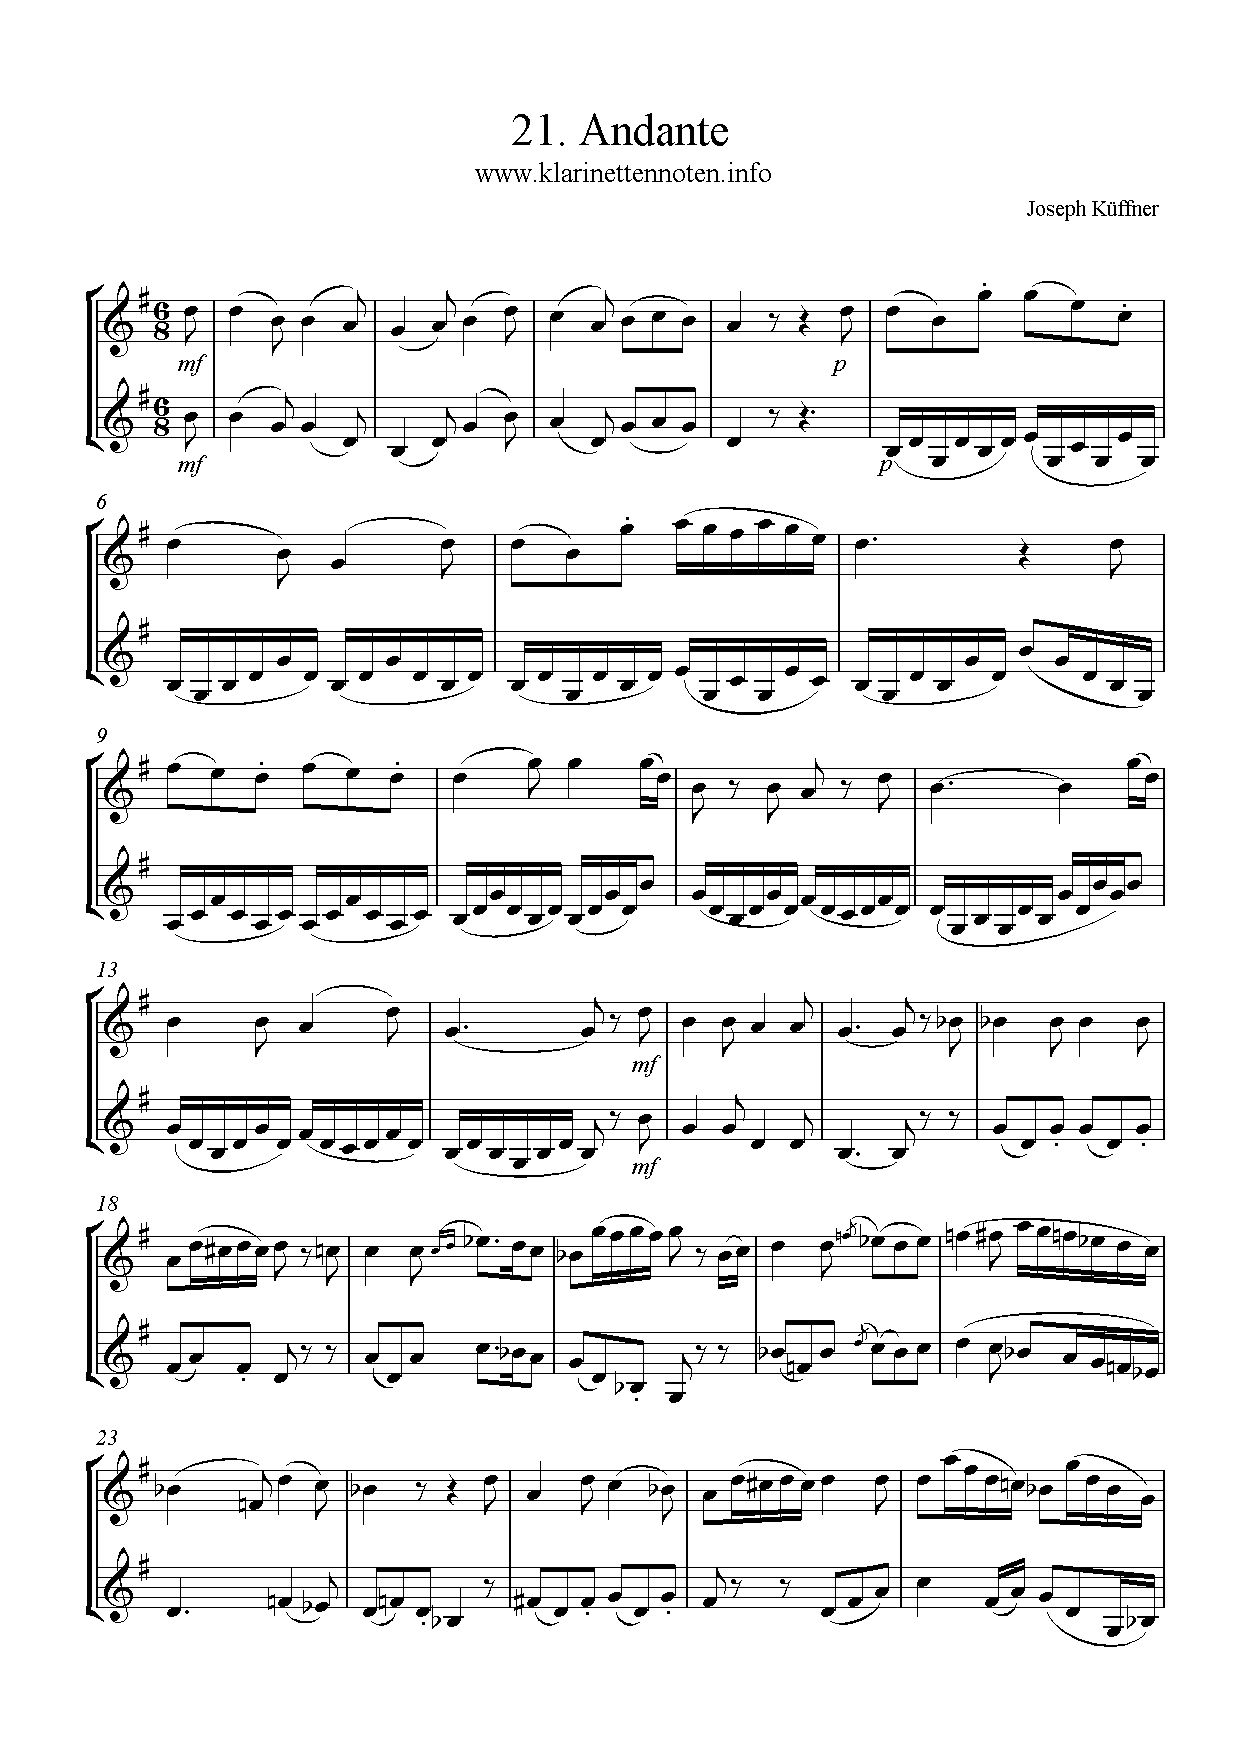 24 instruktive Duette- Joseph Küffner -21 Andante